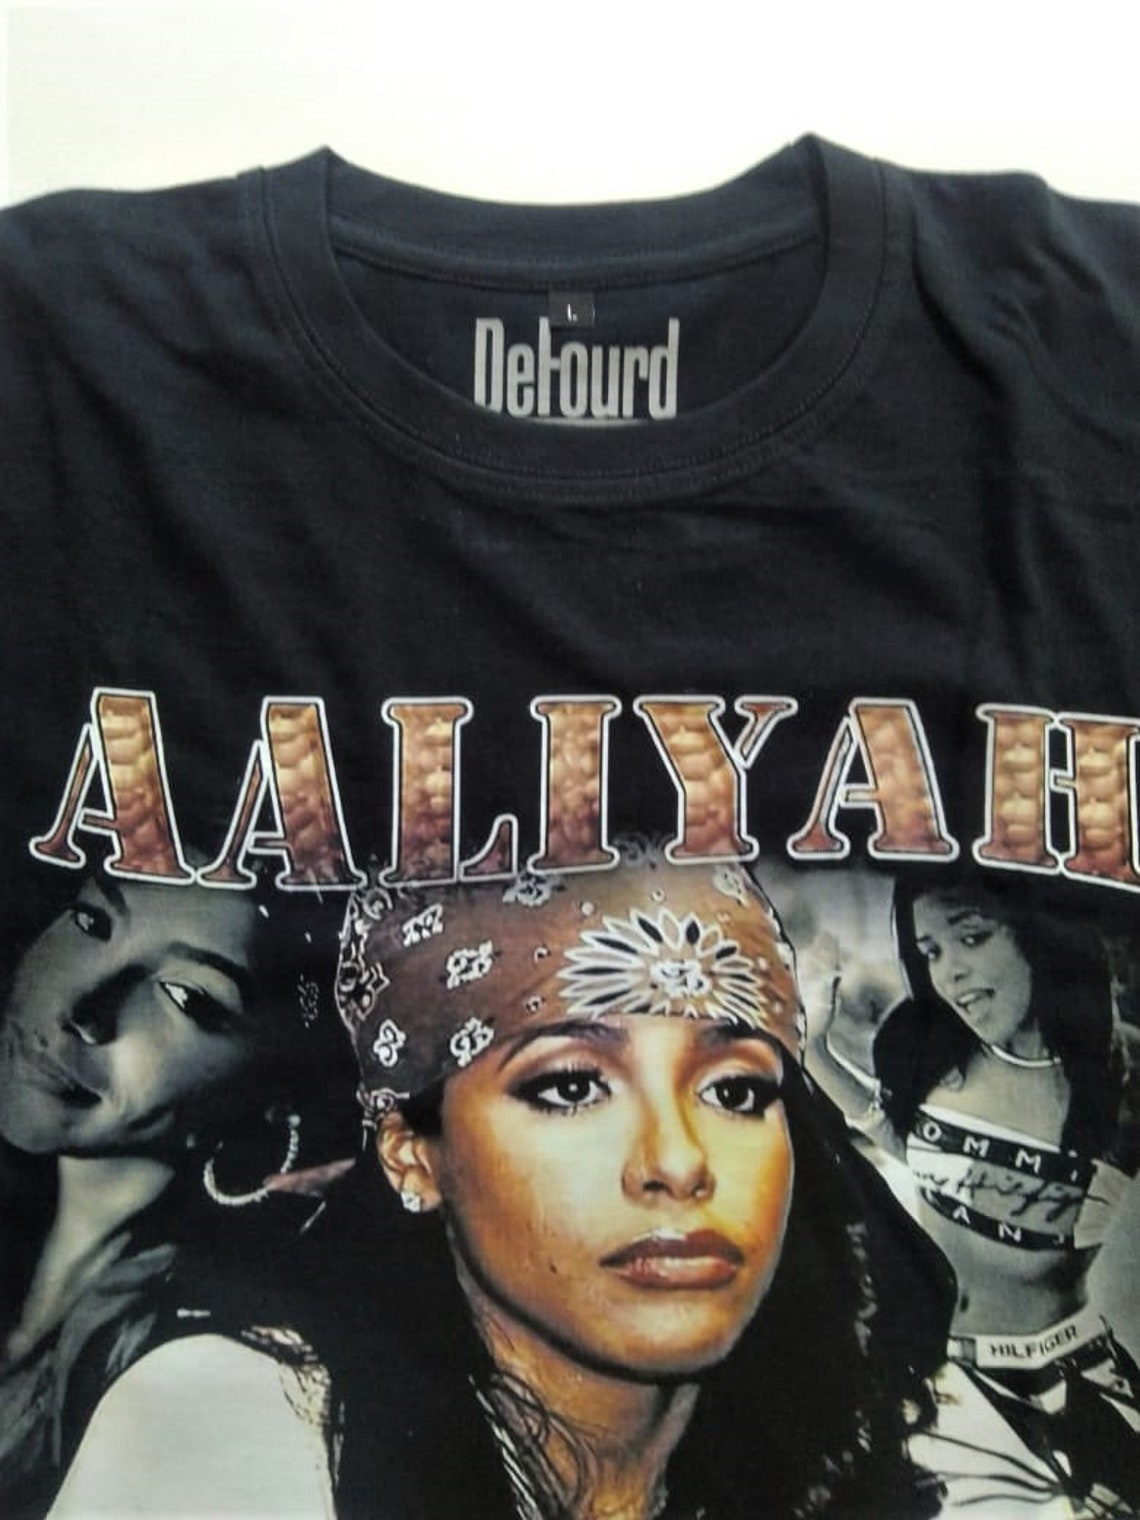 Aaliyah The Princess Of R & B Shirt Hip Hop Shirt Rap shirt | Etsy